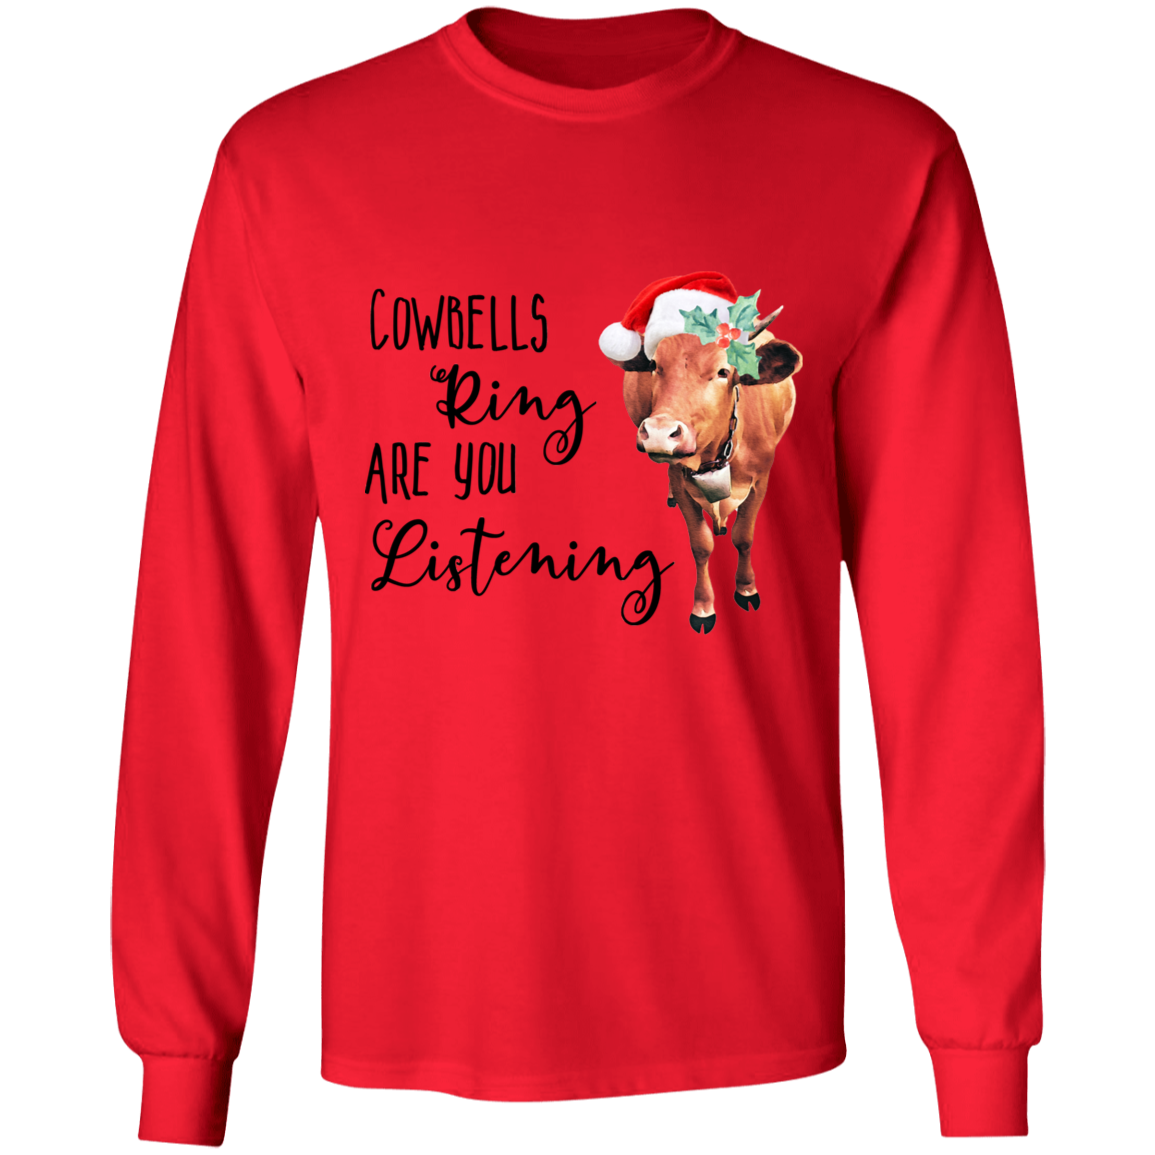 Cowbells ring long sleeve T'shirt